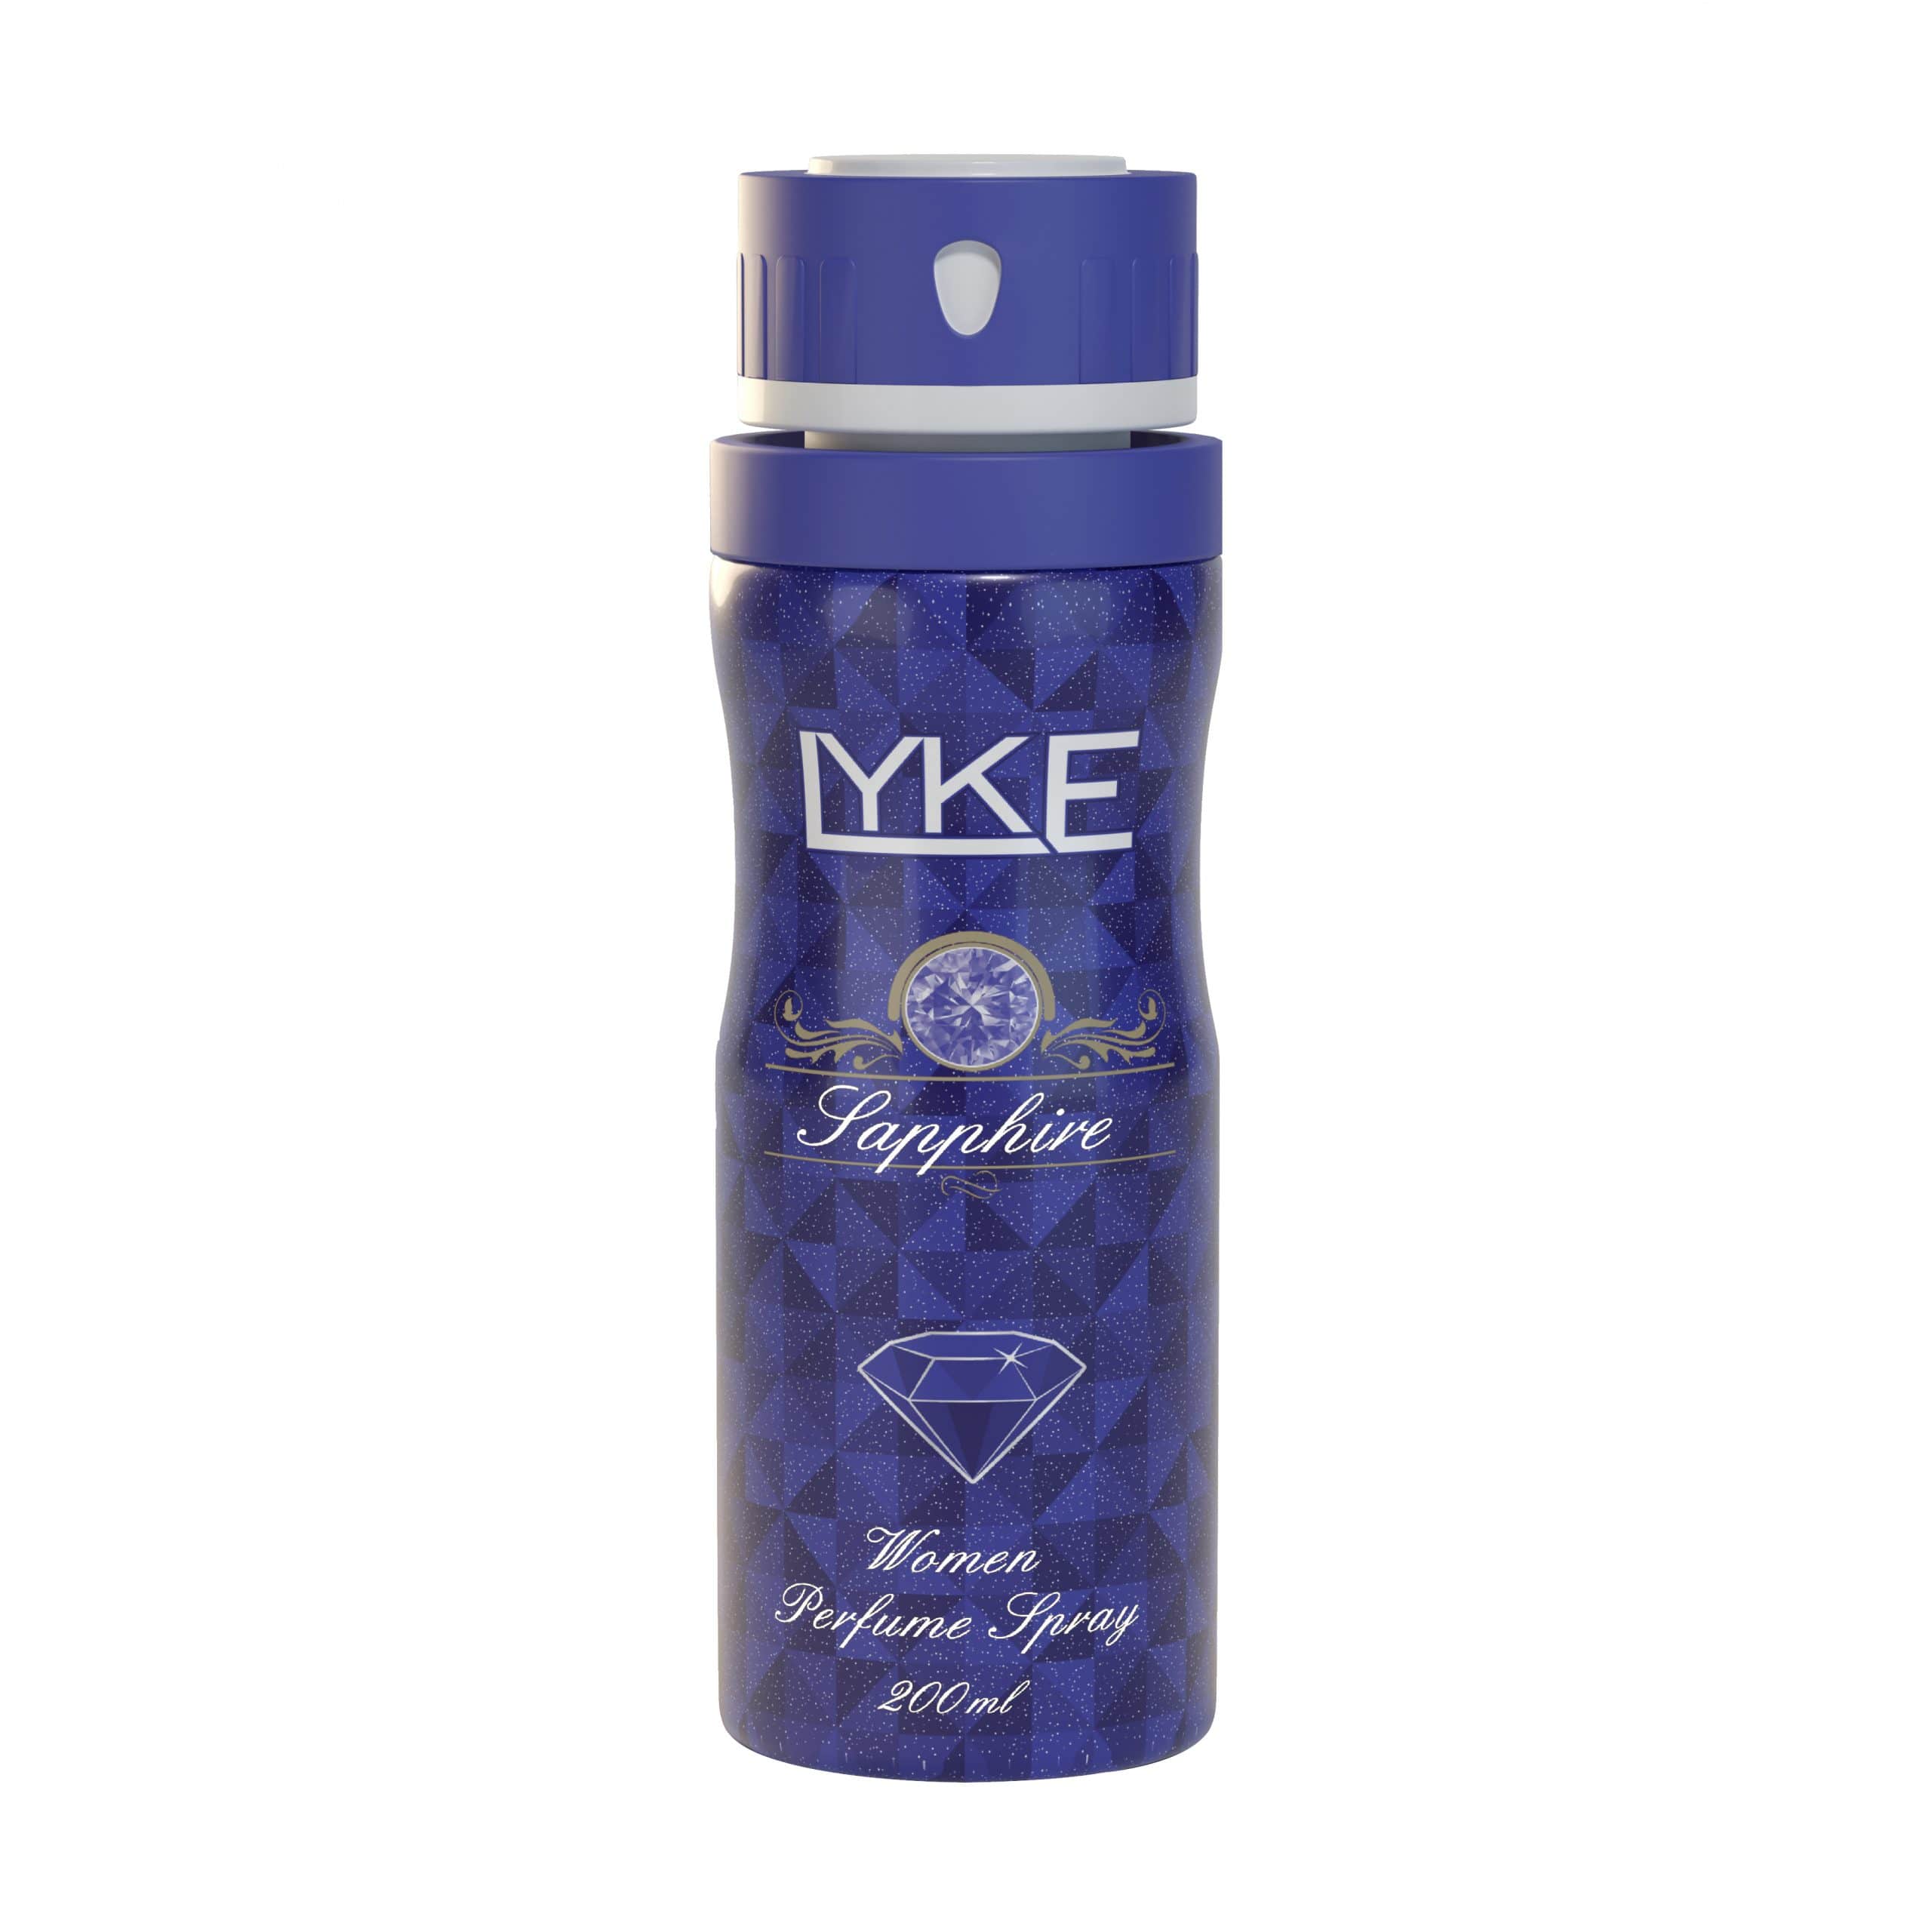 LYKE Sapphire Perfume Spray (200ml)